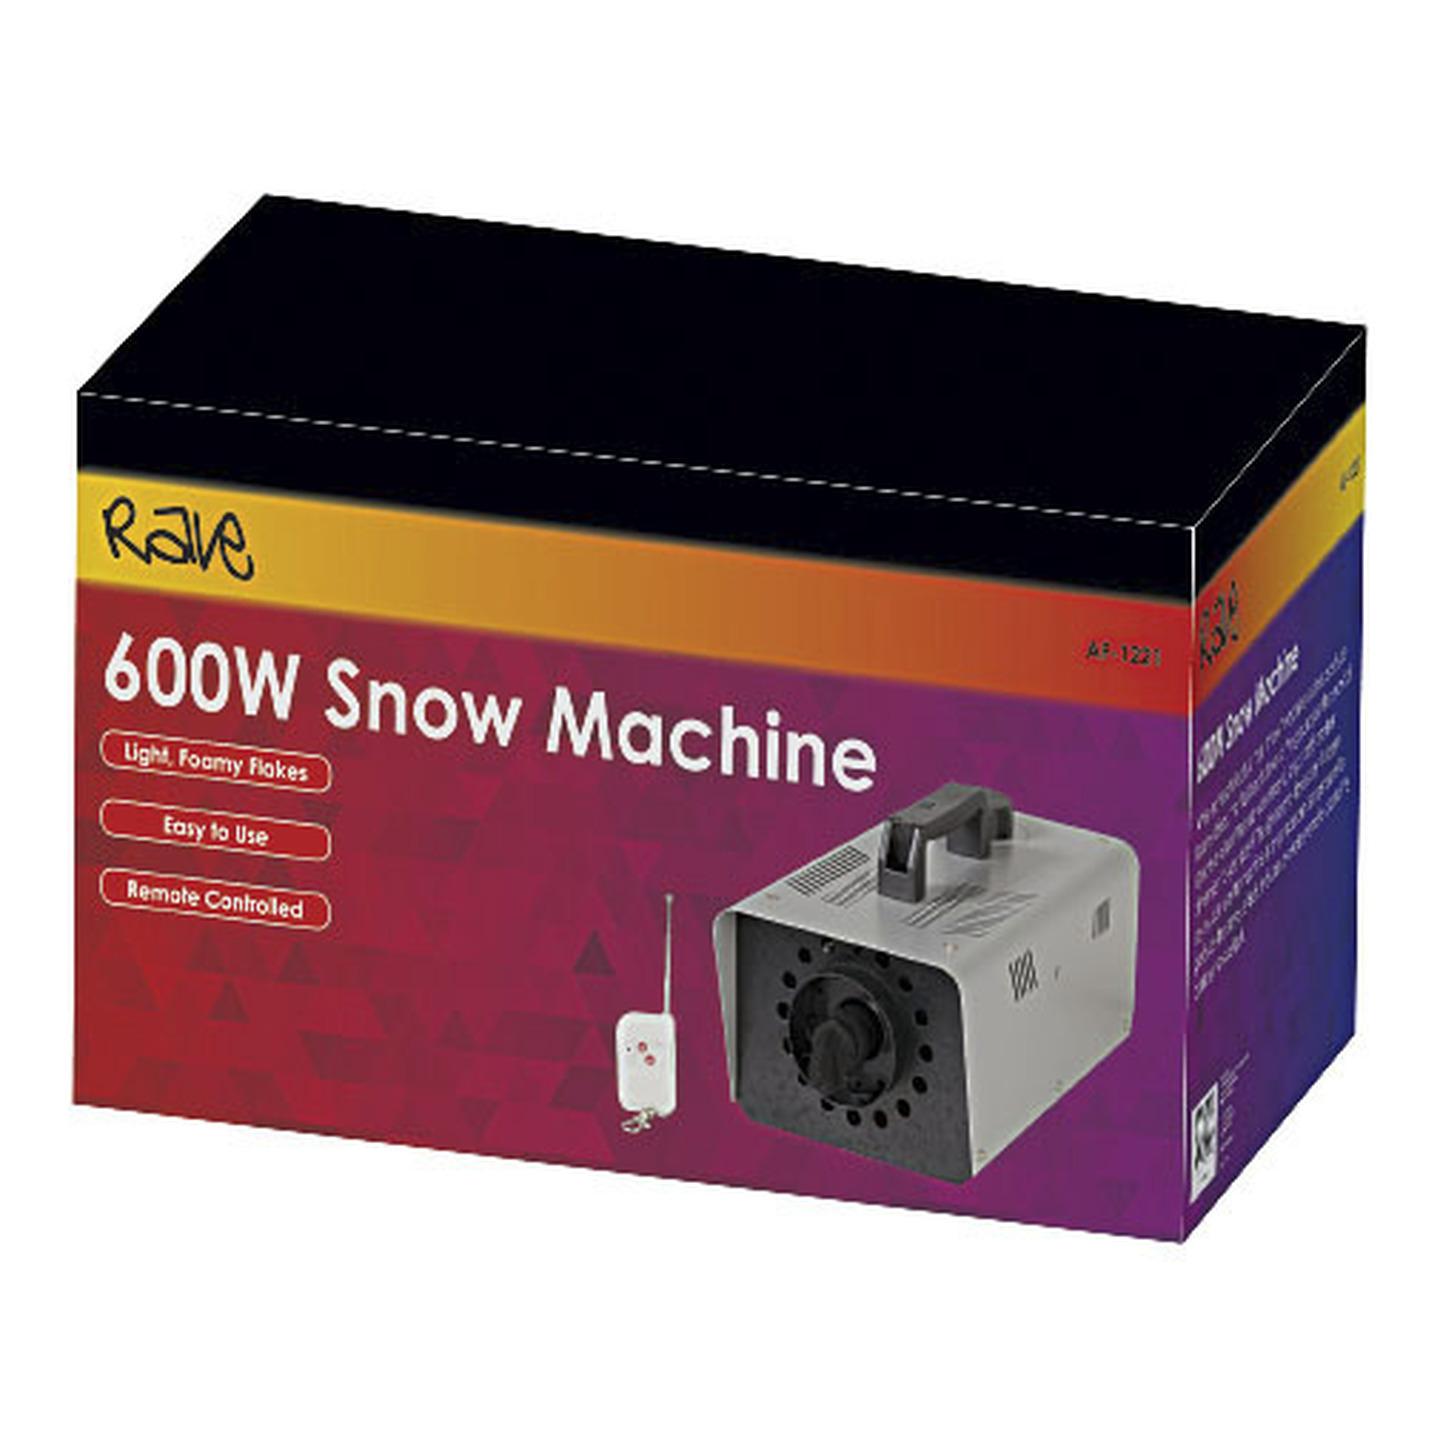 Rave 600W Snow Machine